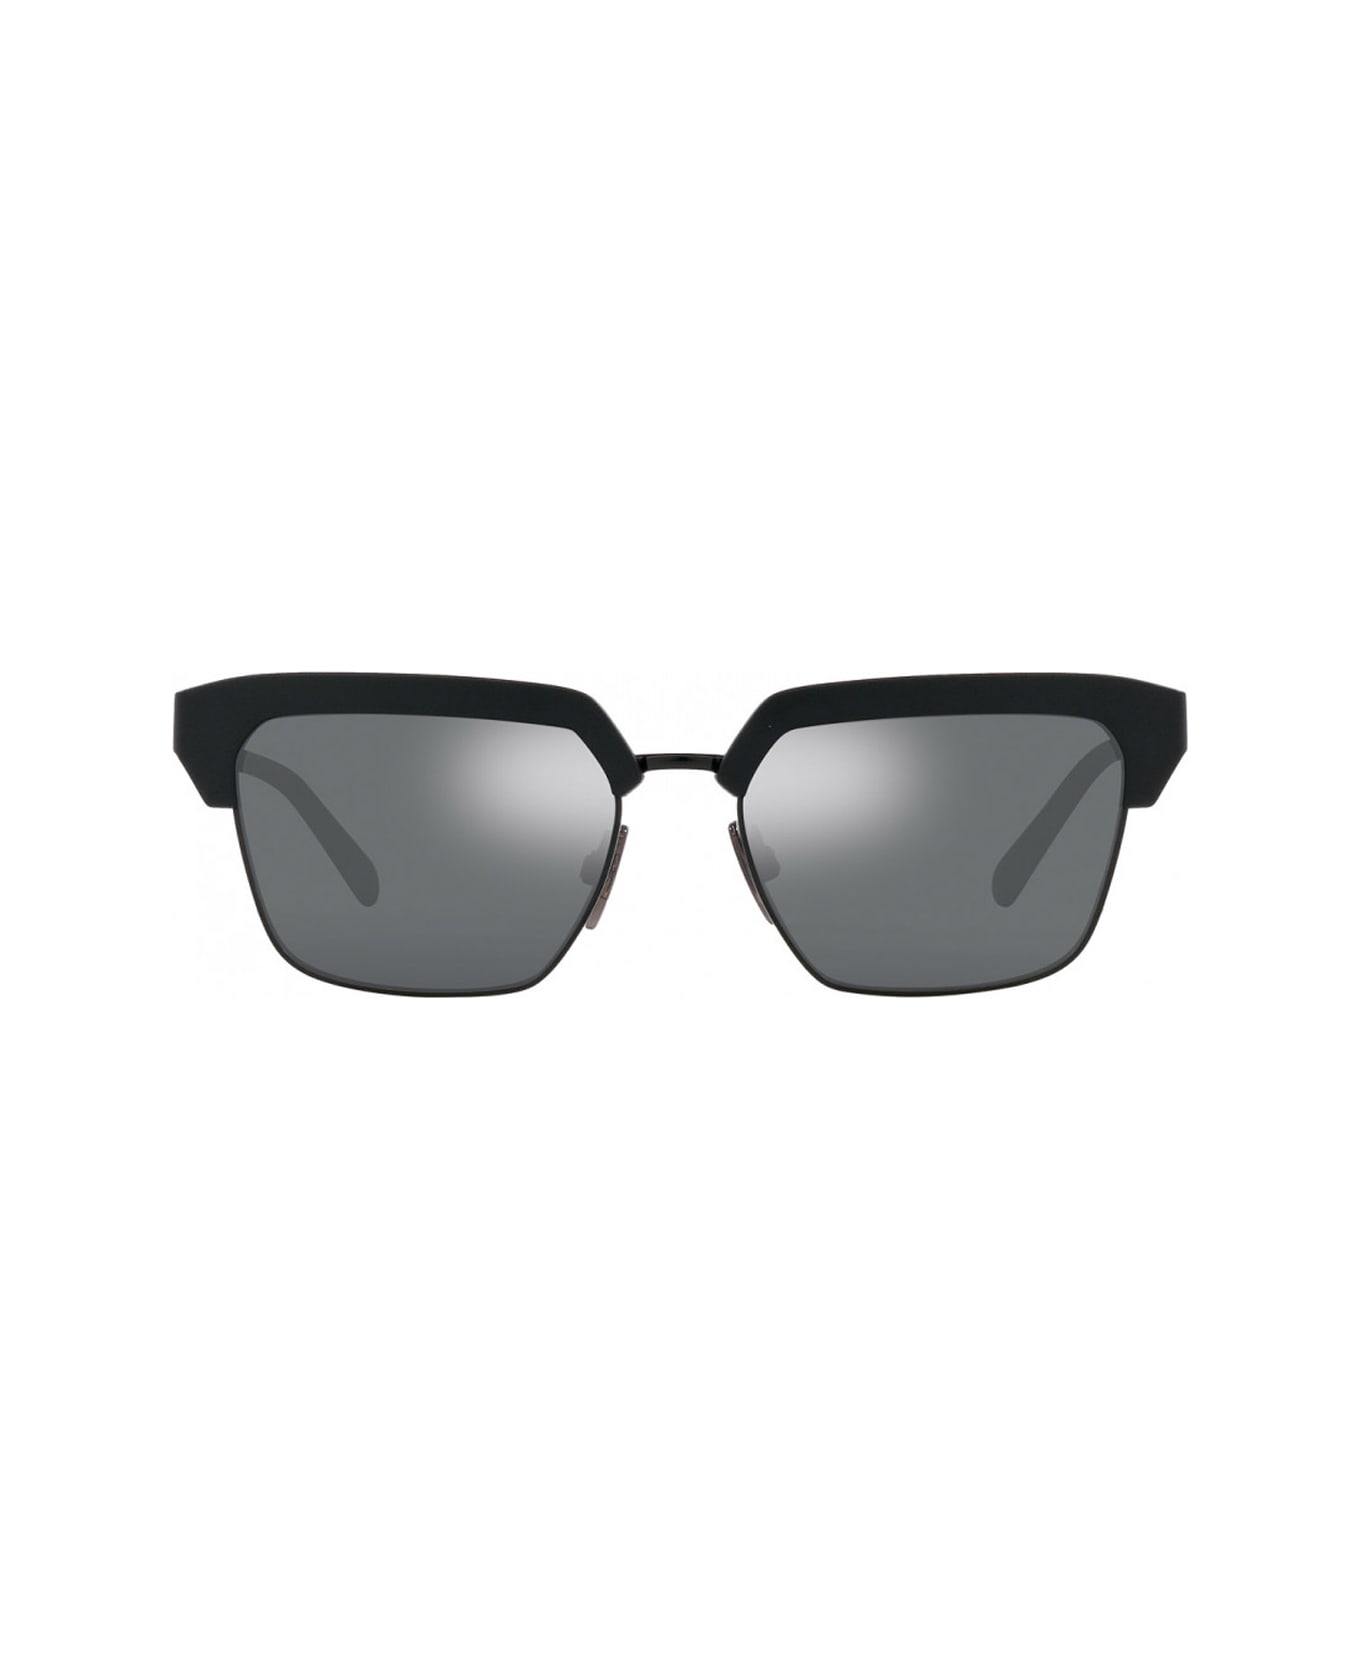 Dolce & Gabbana Eyewear Dg6185 25256g Sunglasses - Nero サングラス